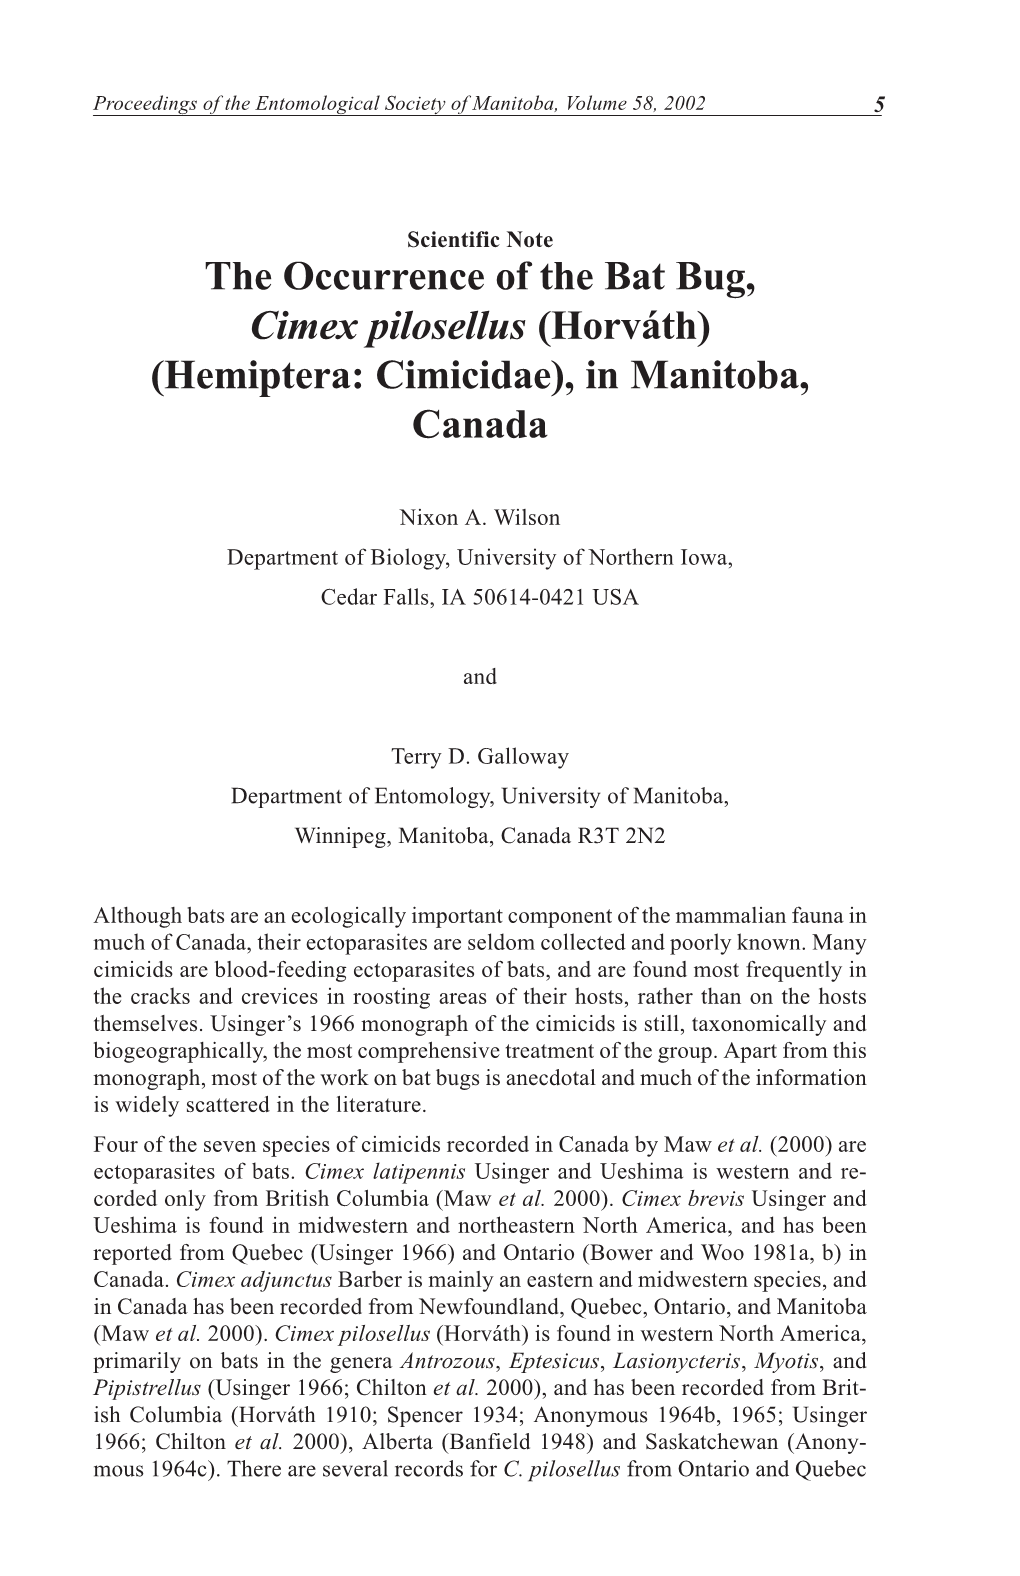 The Occurrence of the Bat Bug, Cimex Pilosellus (Horváth) (Hemiptera: Cimicidae), in Manitoba, Canada